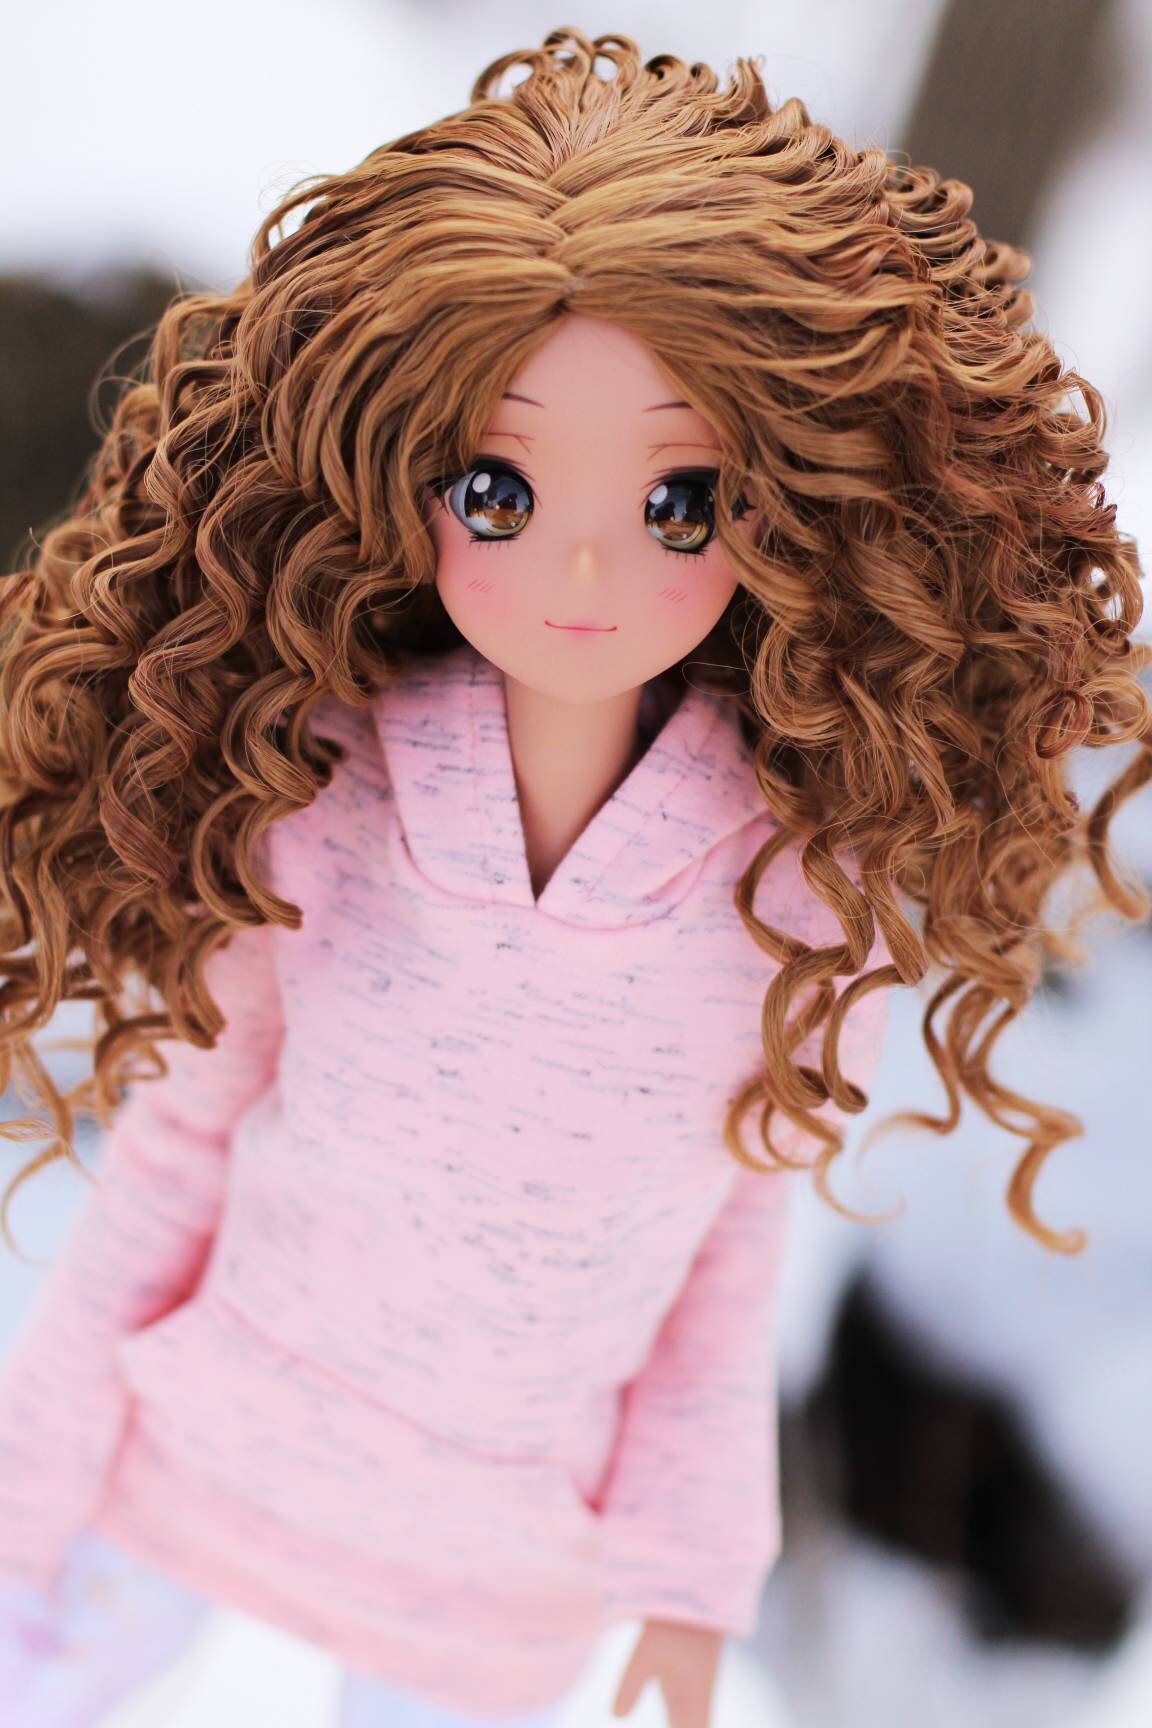 Custom doll Wig for Smart Dolls- Heat Safe - Tangle Resistant- 8.5" head size of Bjd, SD, Dollfie Dream dolls  Ginger